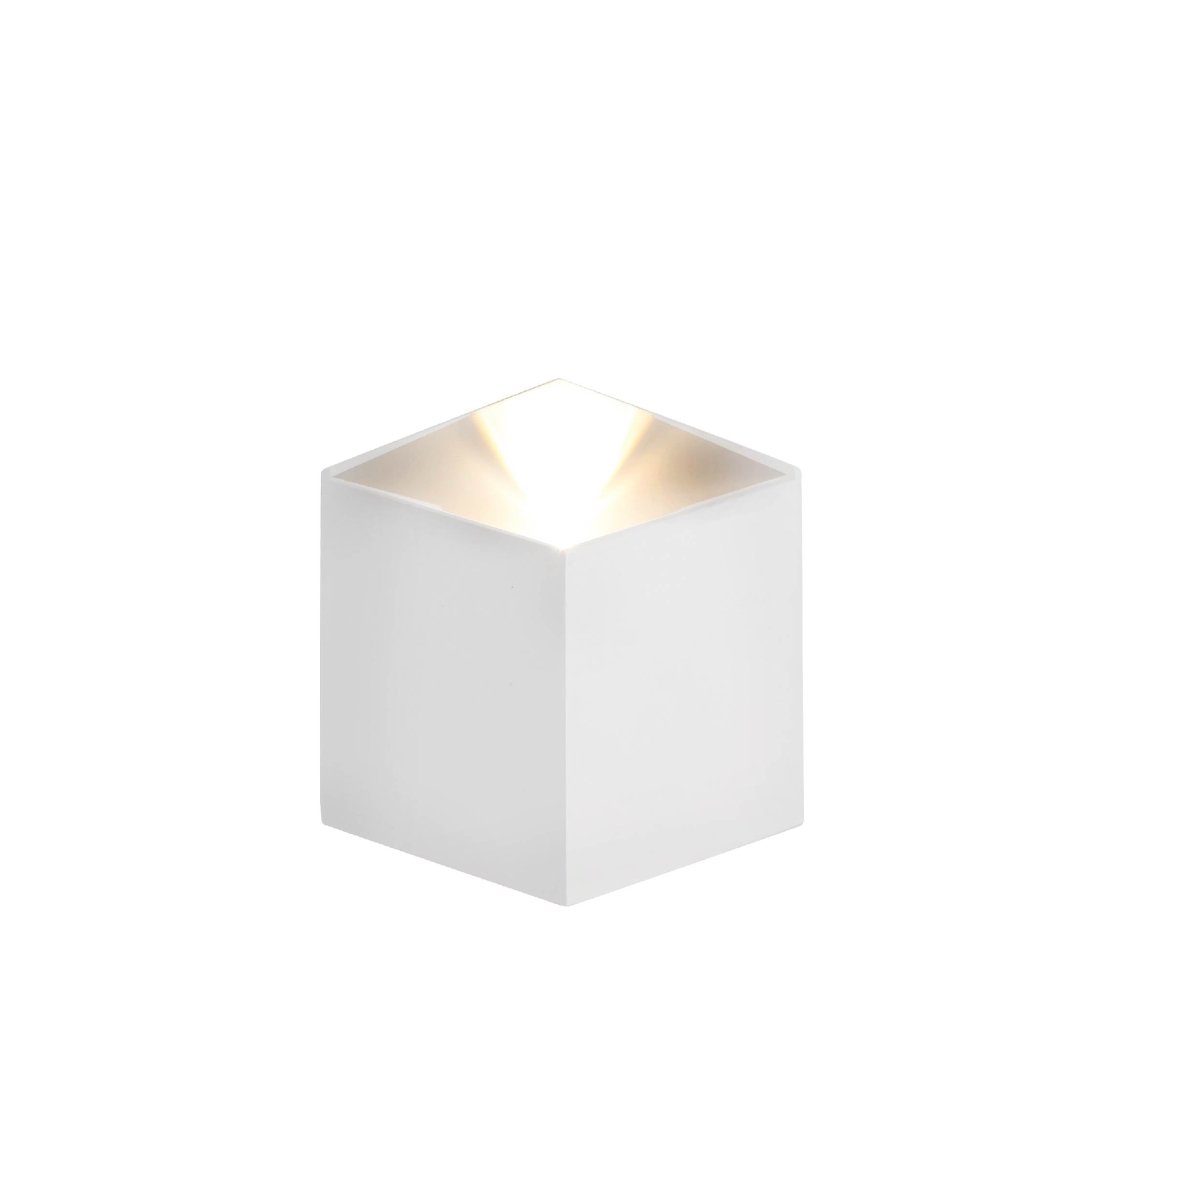 Main image of White Cuboid Up Down Outdoor Modern LED Wall Light | TEKLED 182-03384